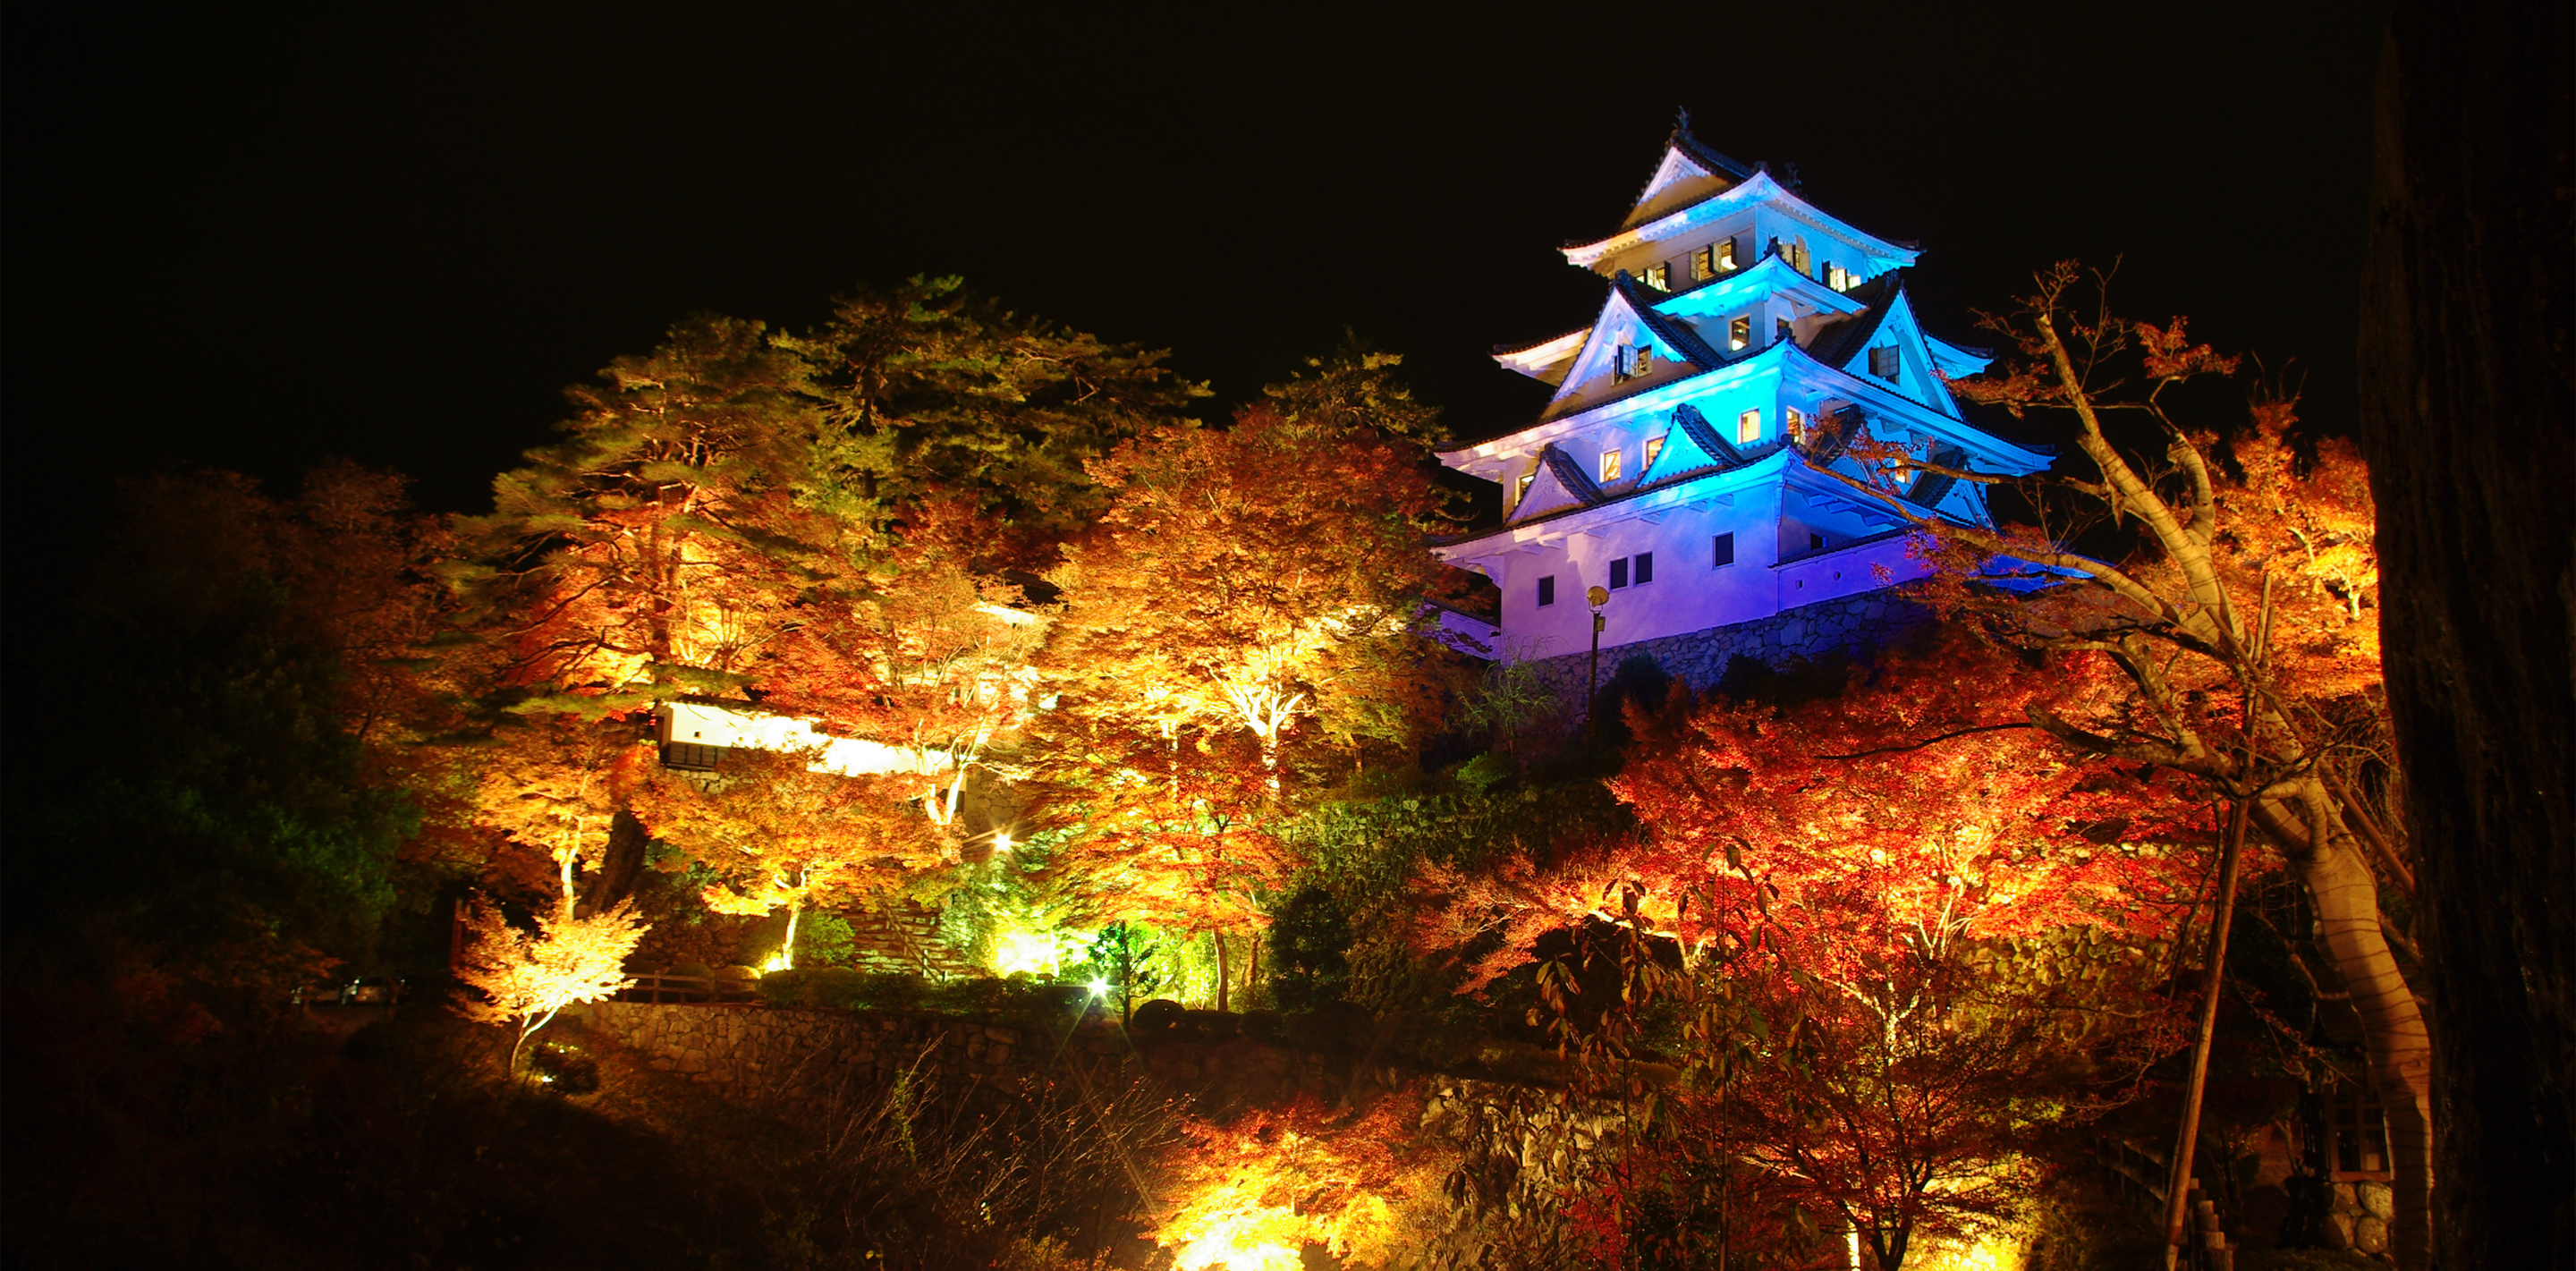 Come to visit every season! Four seasons at Gujo Hachiman Castle